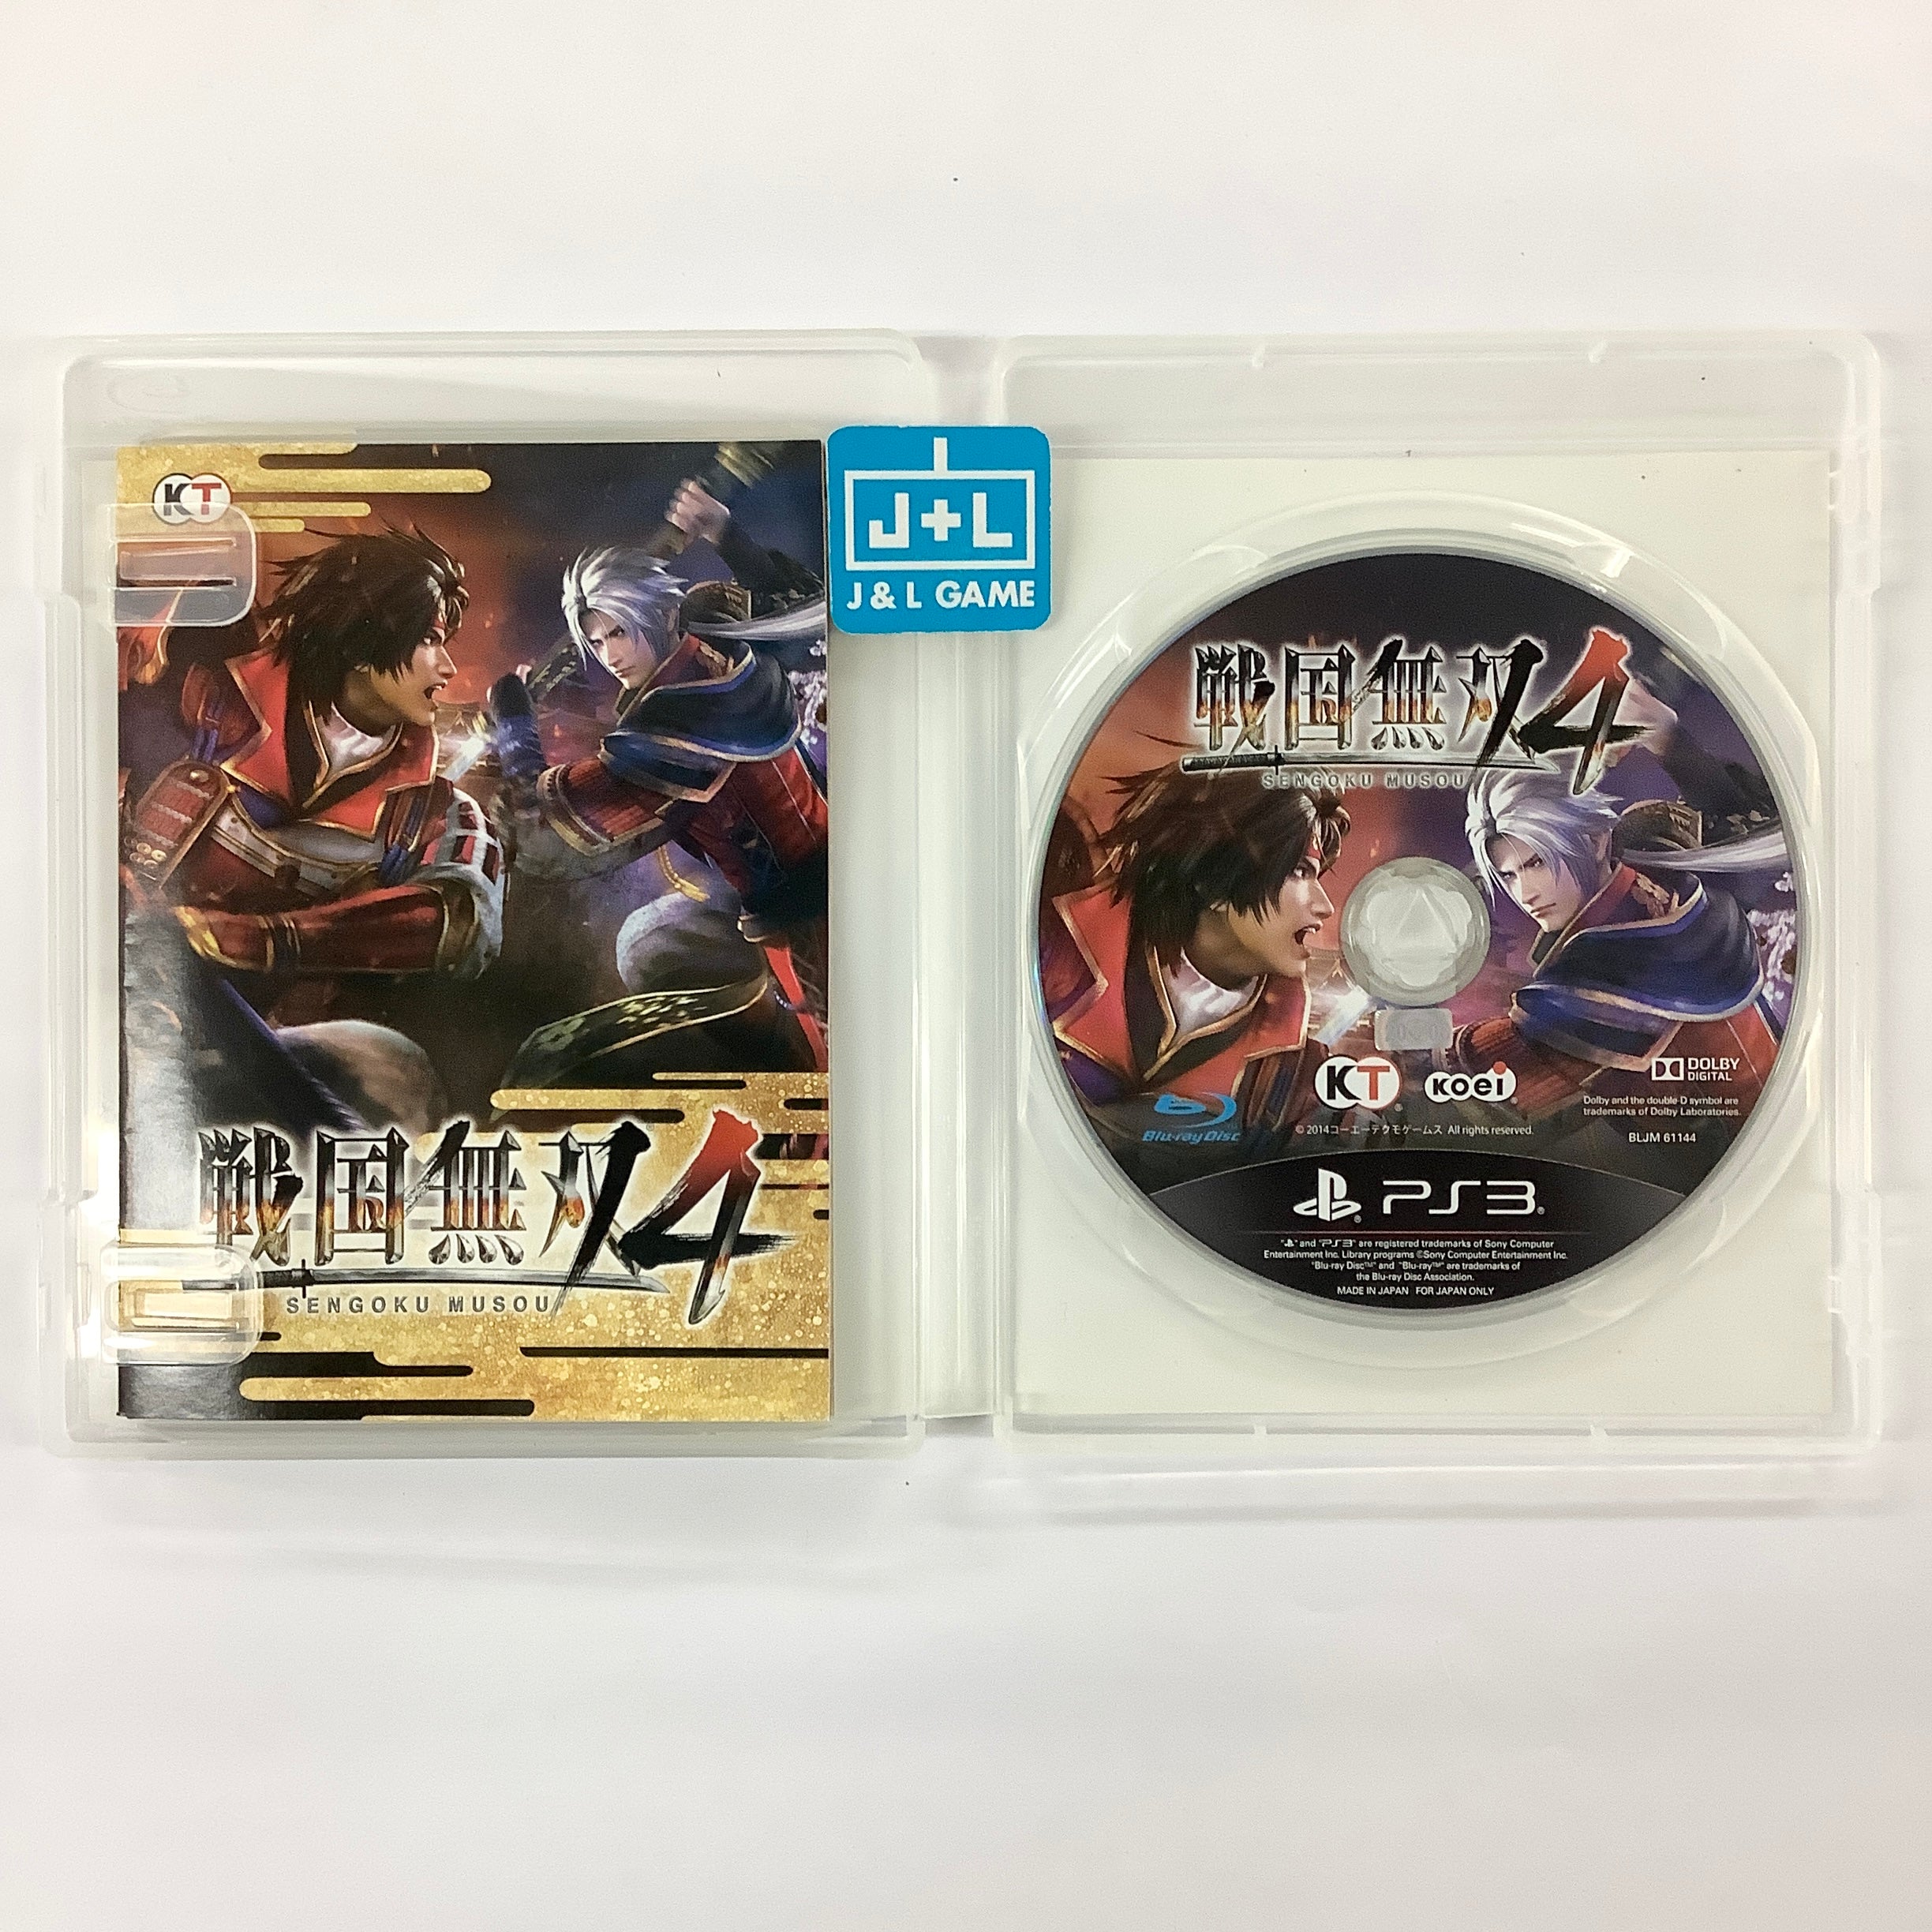 Sengoku Musou 4 - (PS3) PlayStation 3 [Pre-Owned] (Japanese Import) Video Games Koei Tecmo Games   